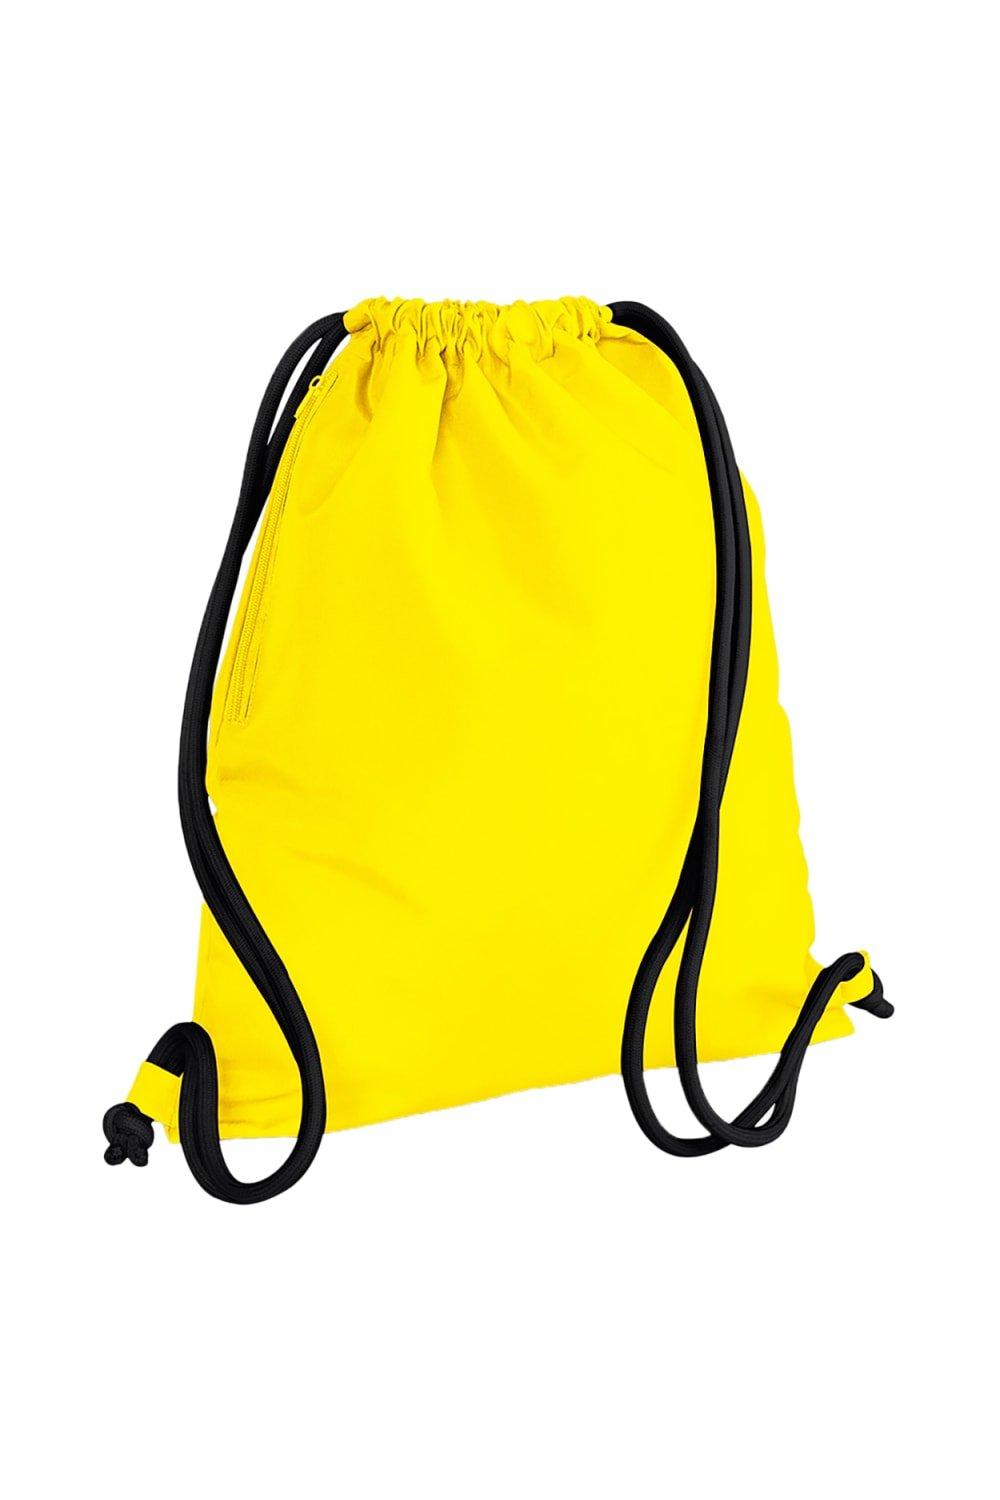 Сумка Icon на шнурке / Gymsac Bagbase, желтый сумка urban gymsac на шнурке sol s золото